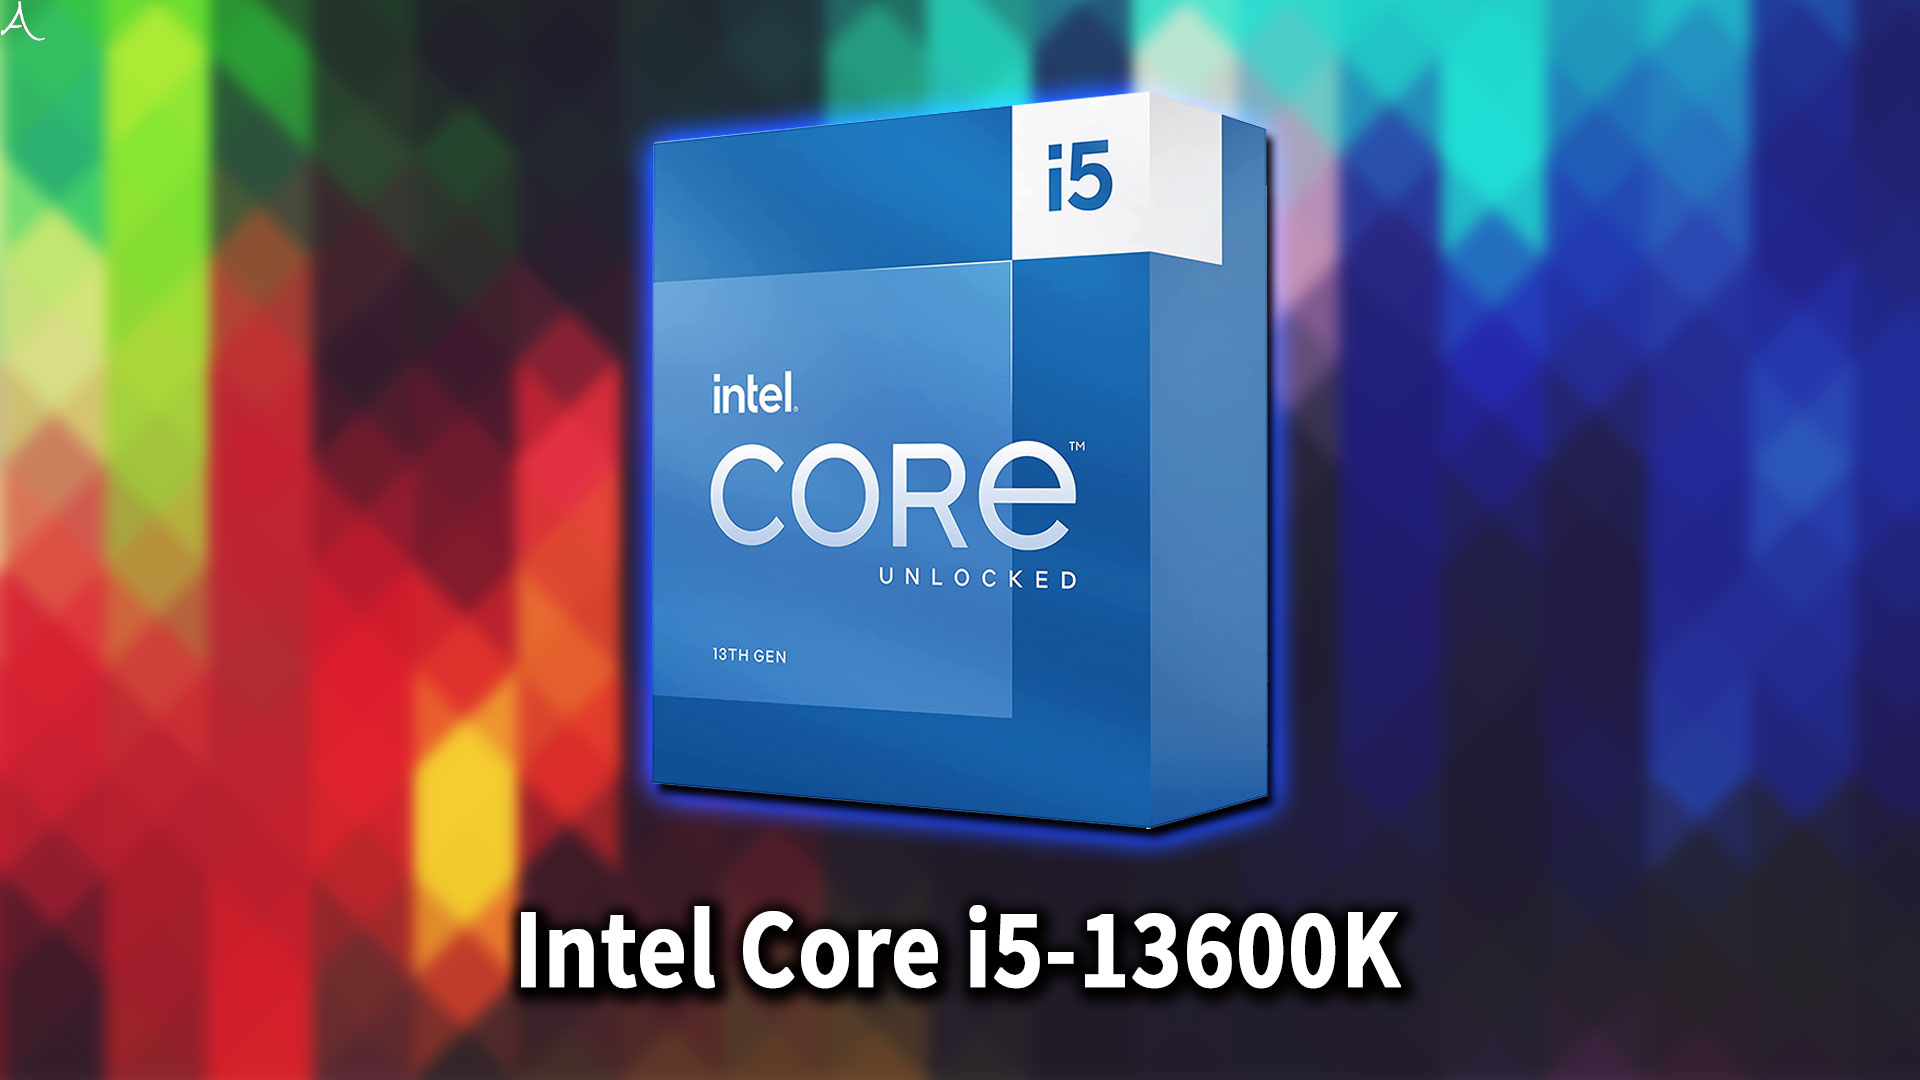 ｢Intel Core i5-13600K｣の消費電力は？おすすめの電源容量はどれくらい？